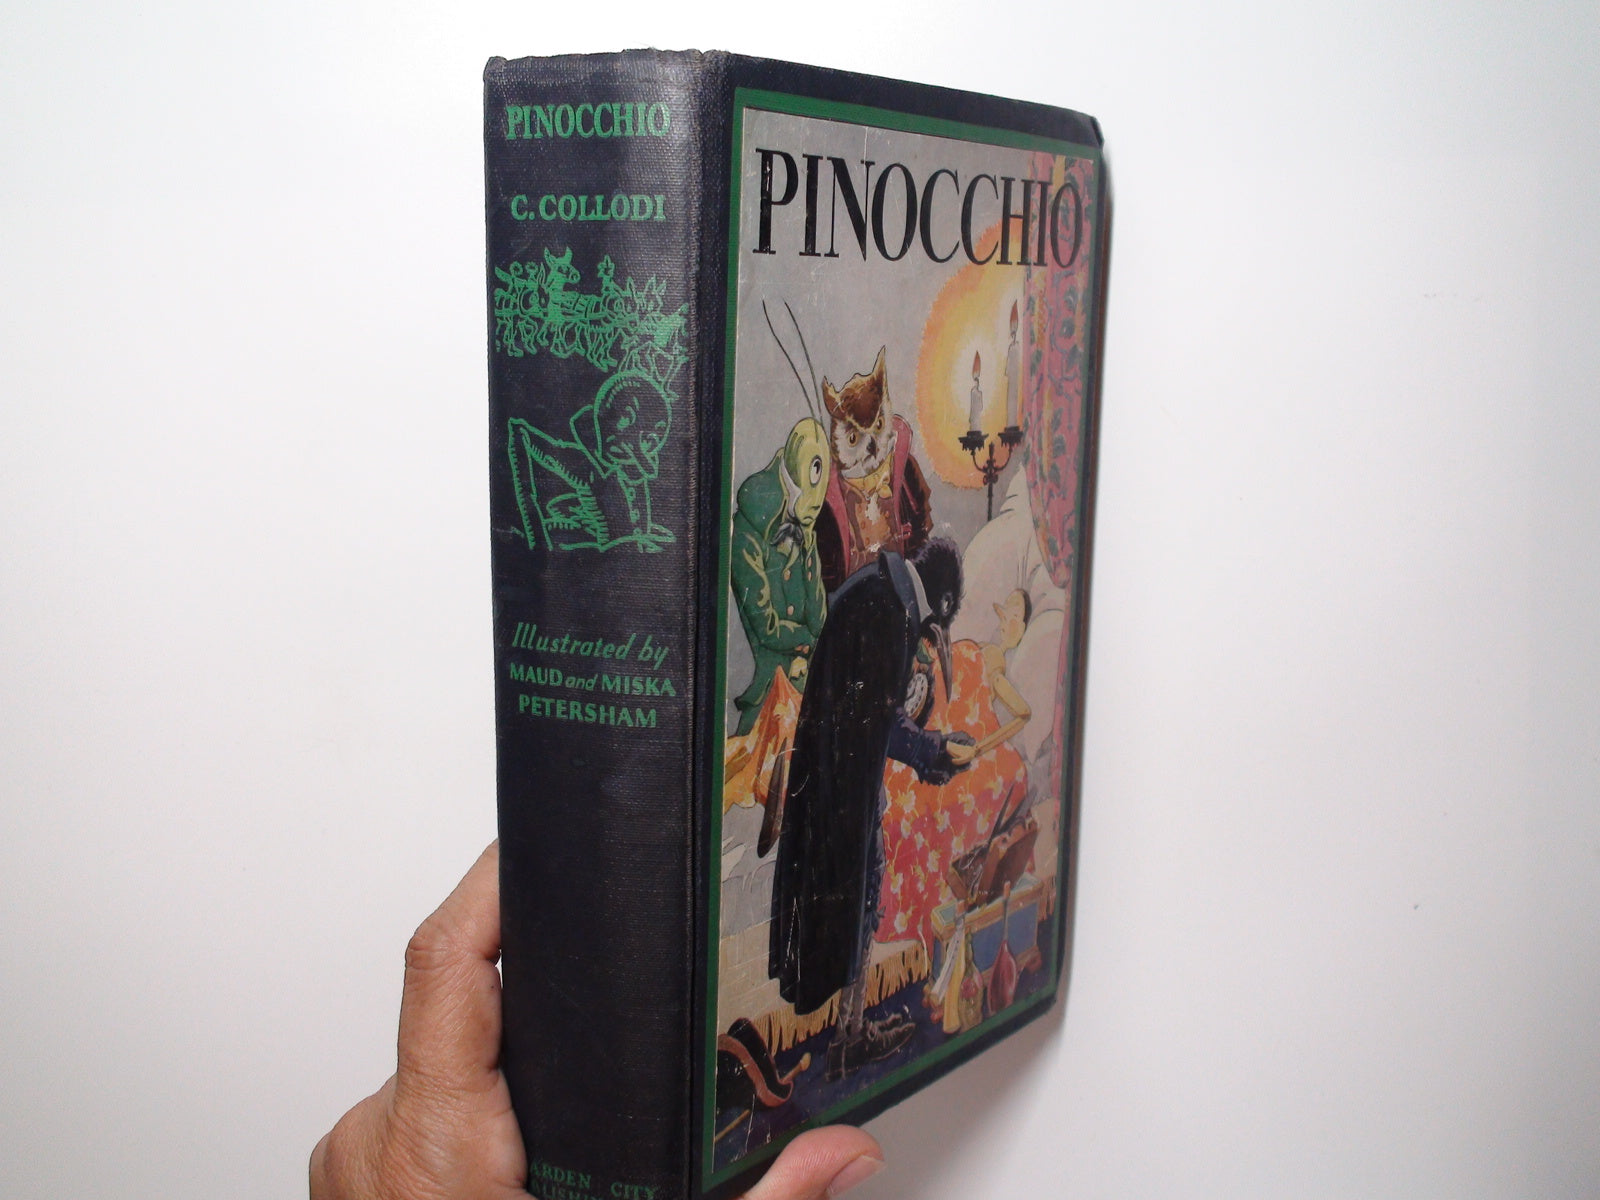 Pinocchio, by C. Collodi, Illustrated by Maud & Miska Petersham, c1930s